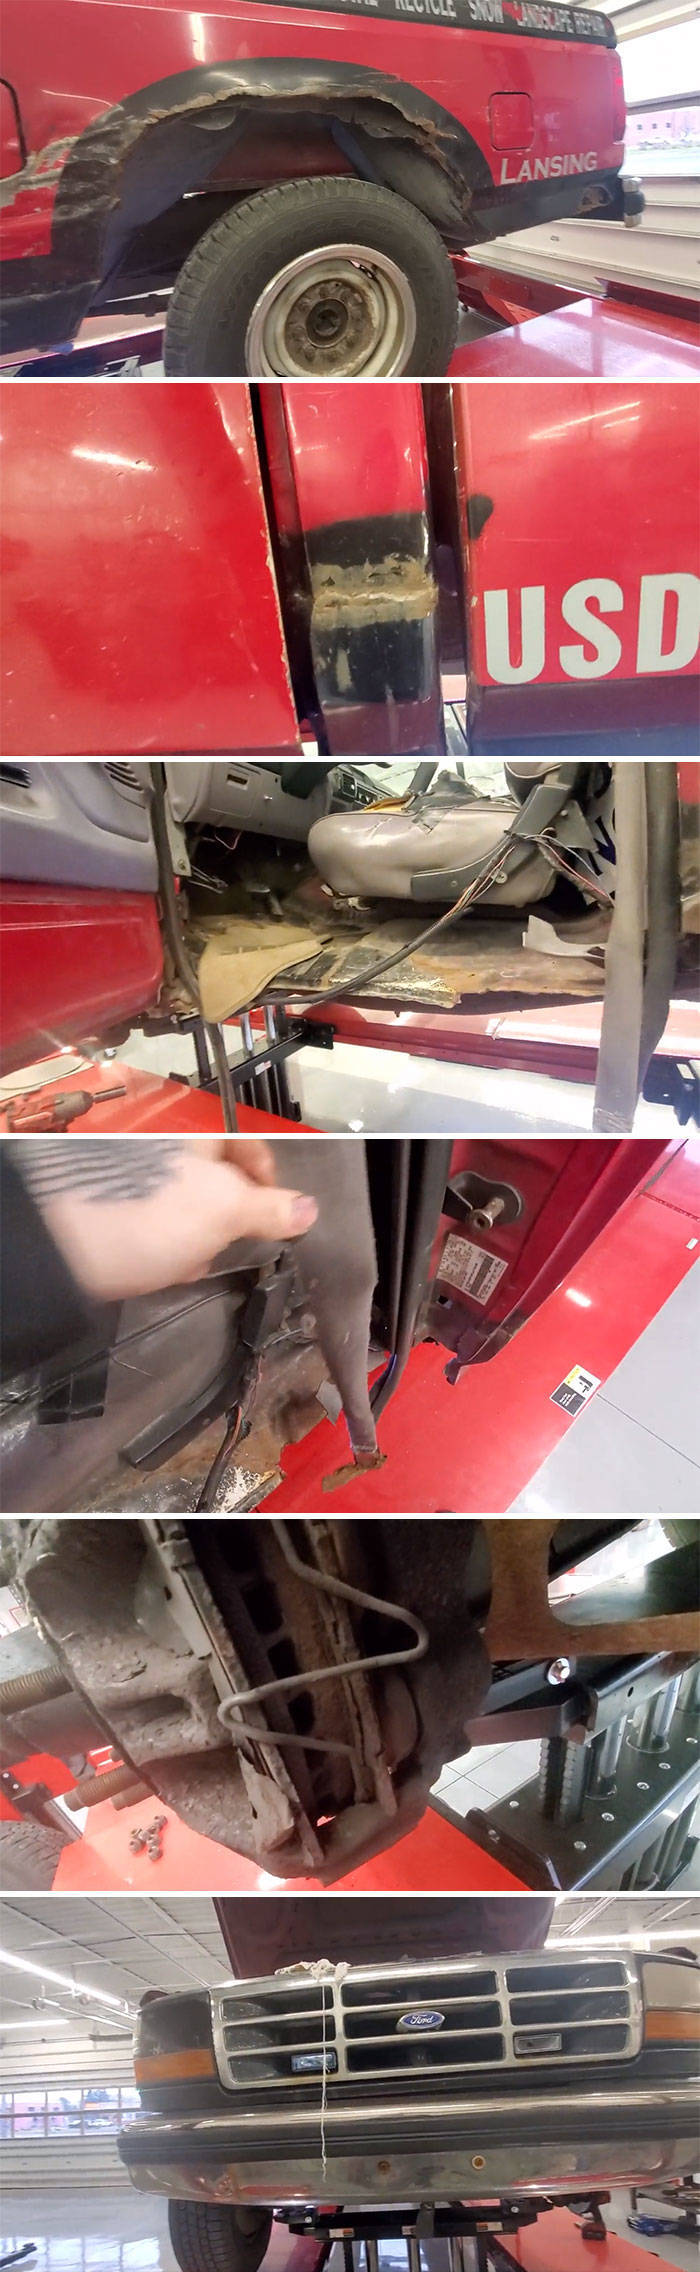 Car Mechanics Deal With All Sorts Of Crazy Stuff…